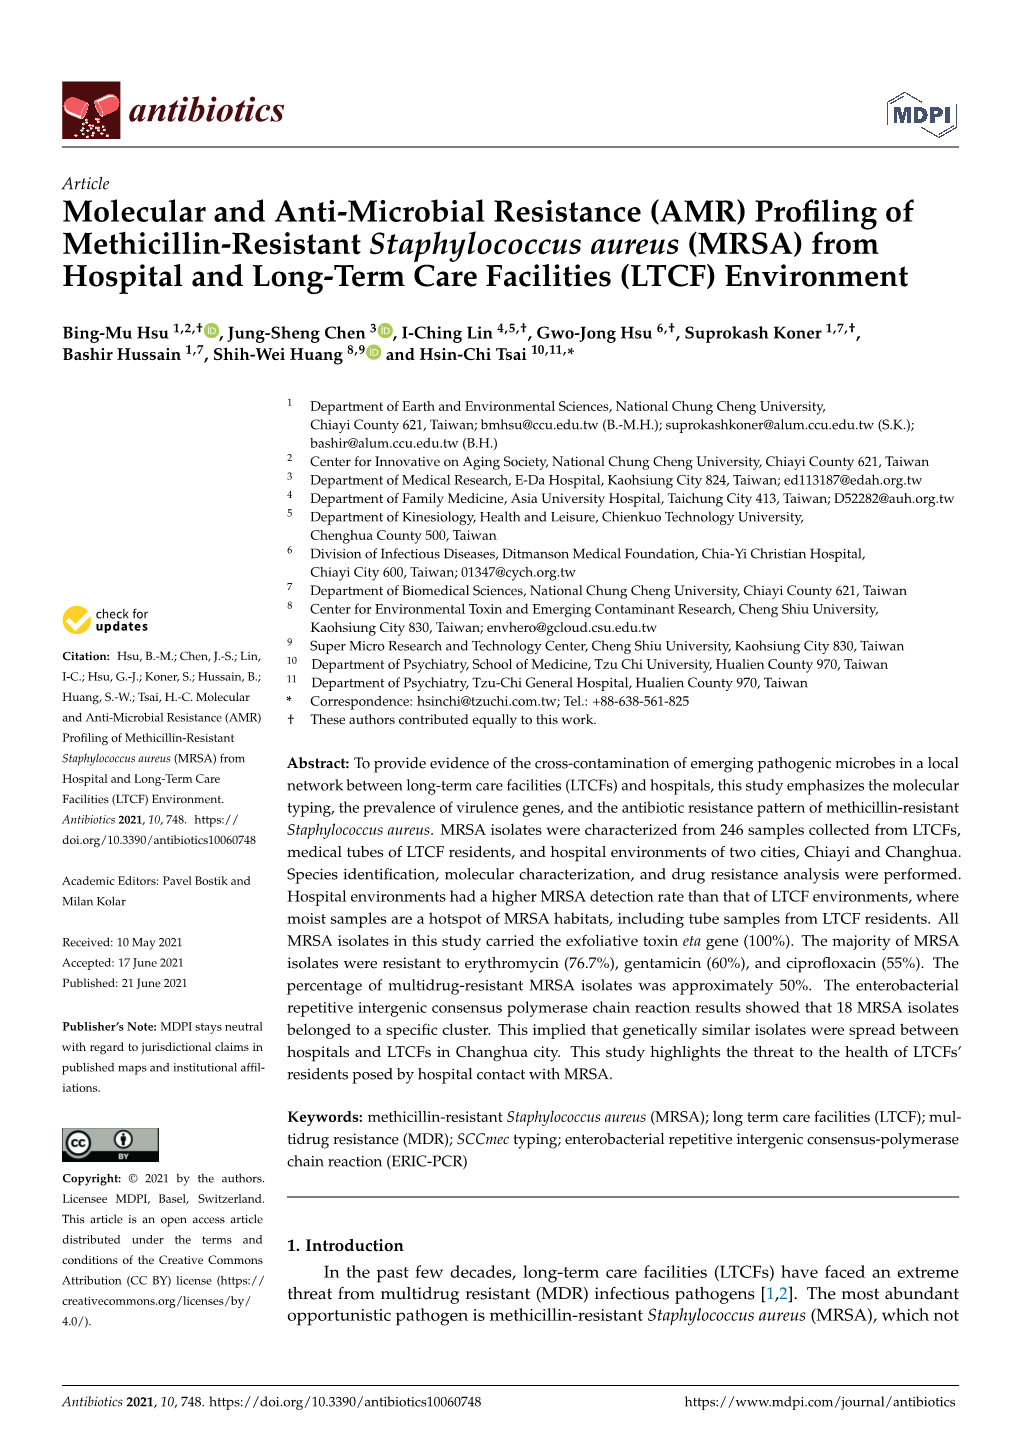 Profiling of Methicillin-Resistant Staphylococcus Aureus